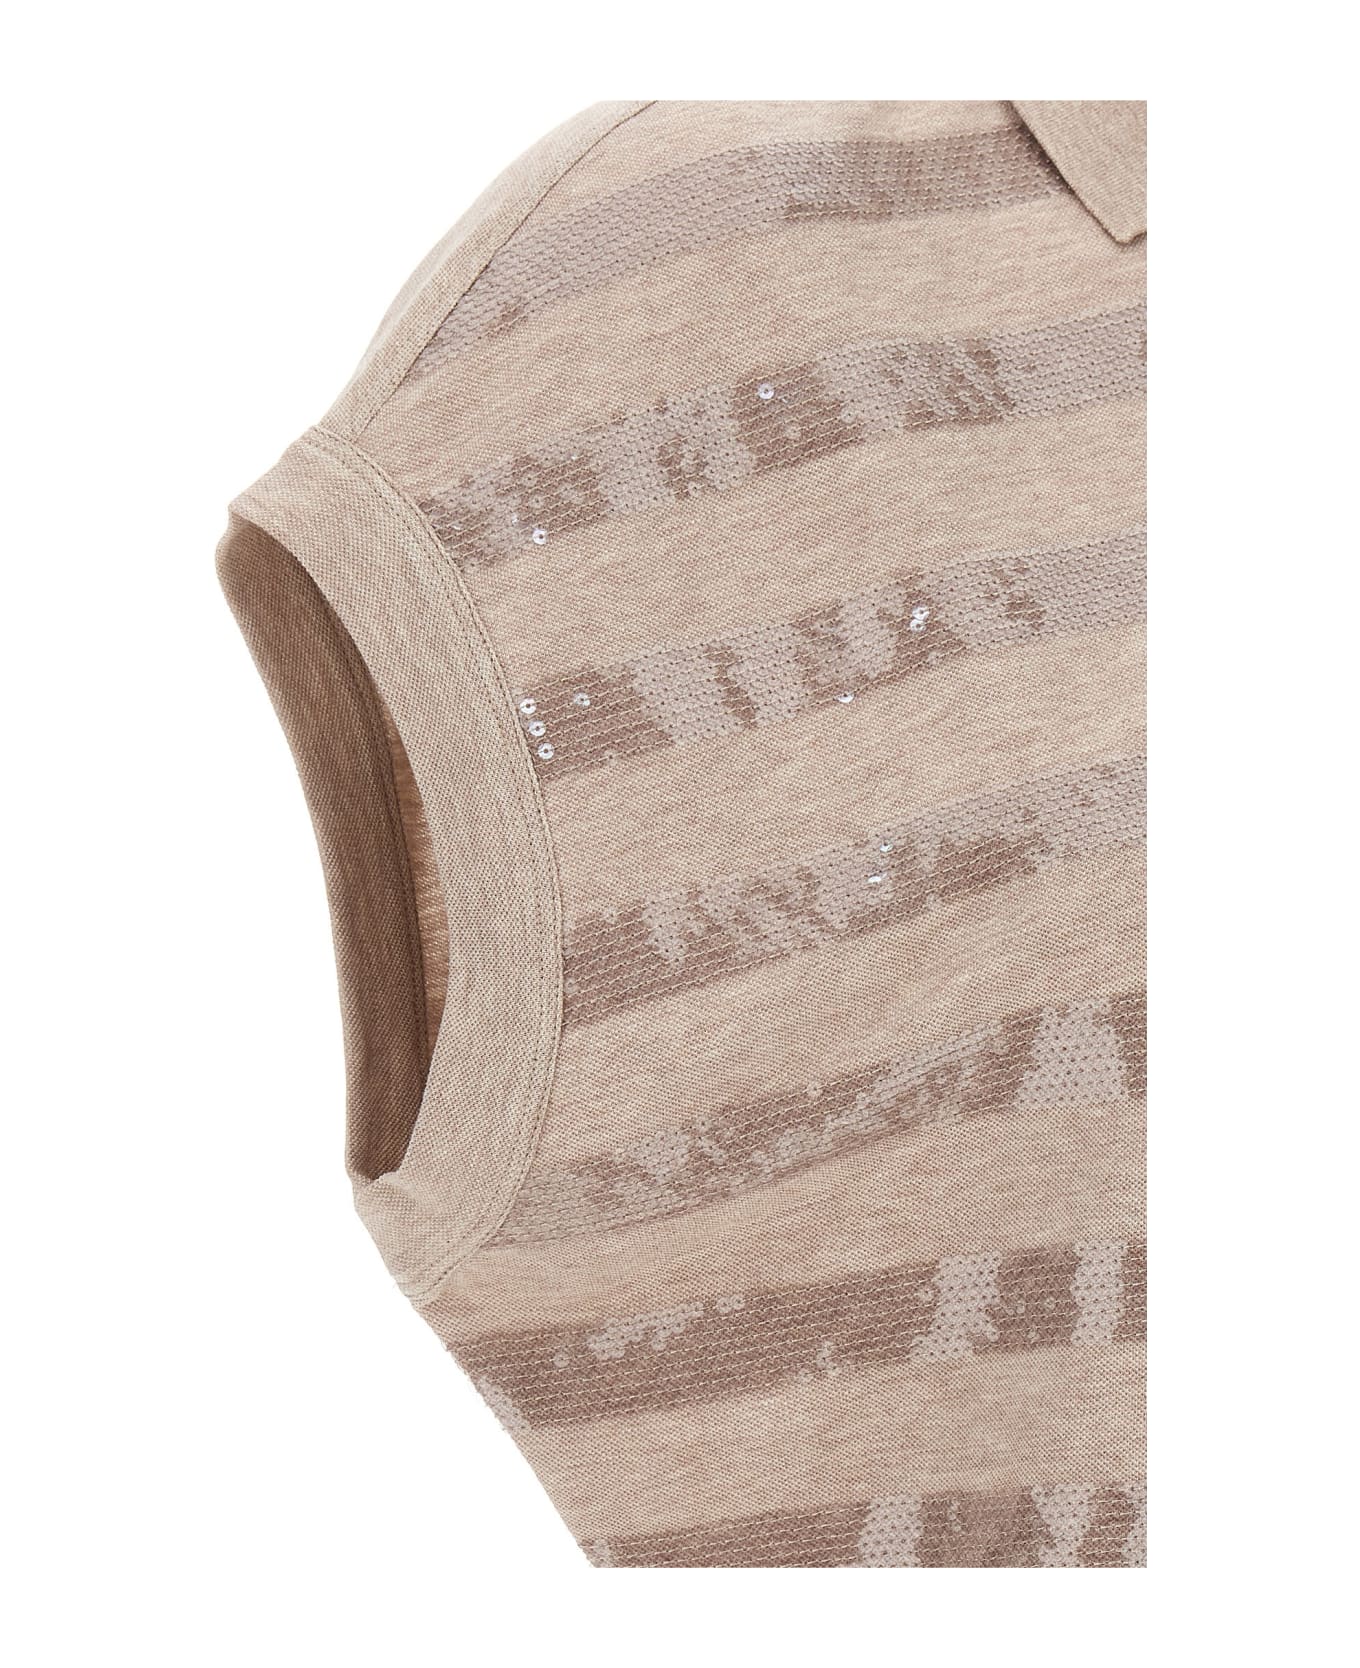 Brunello Cucinelli Sequin Striped Polo Shirt - Beige